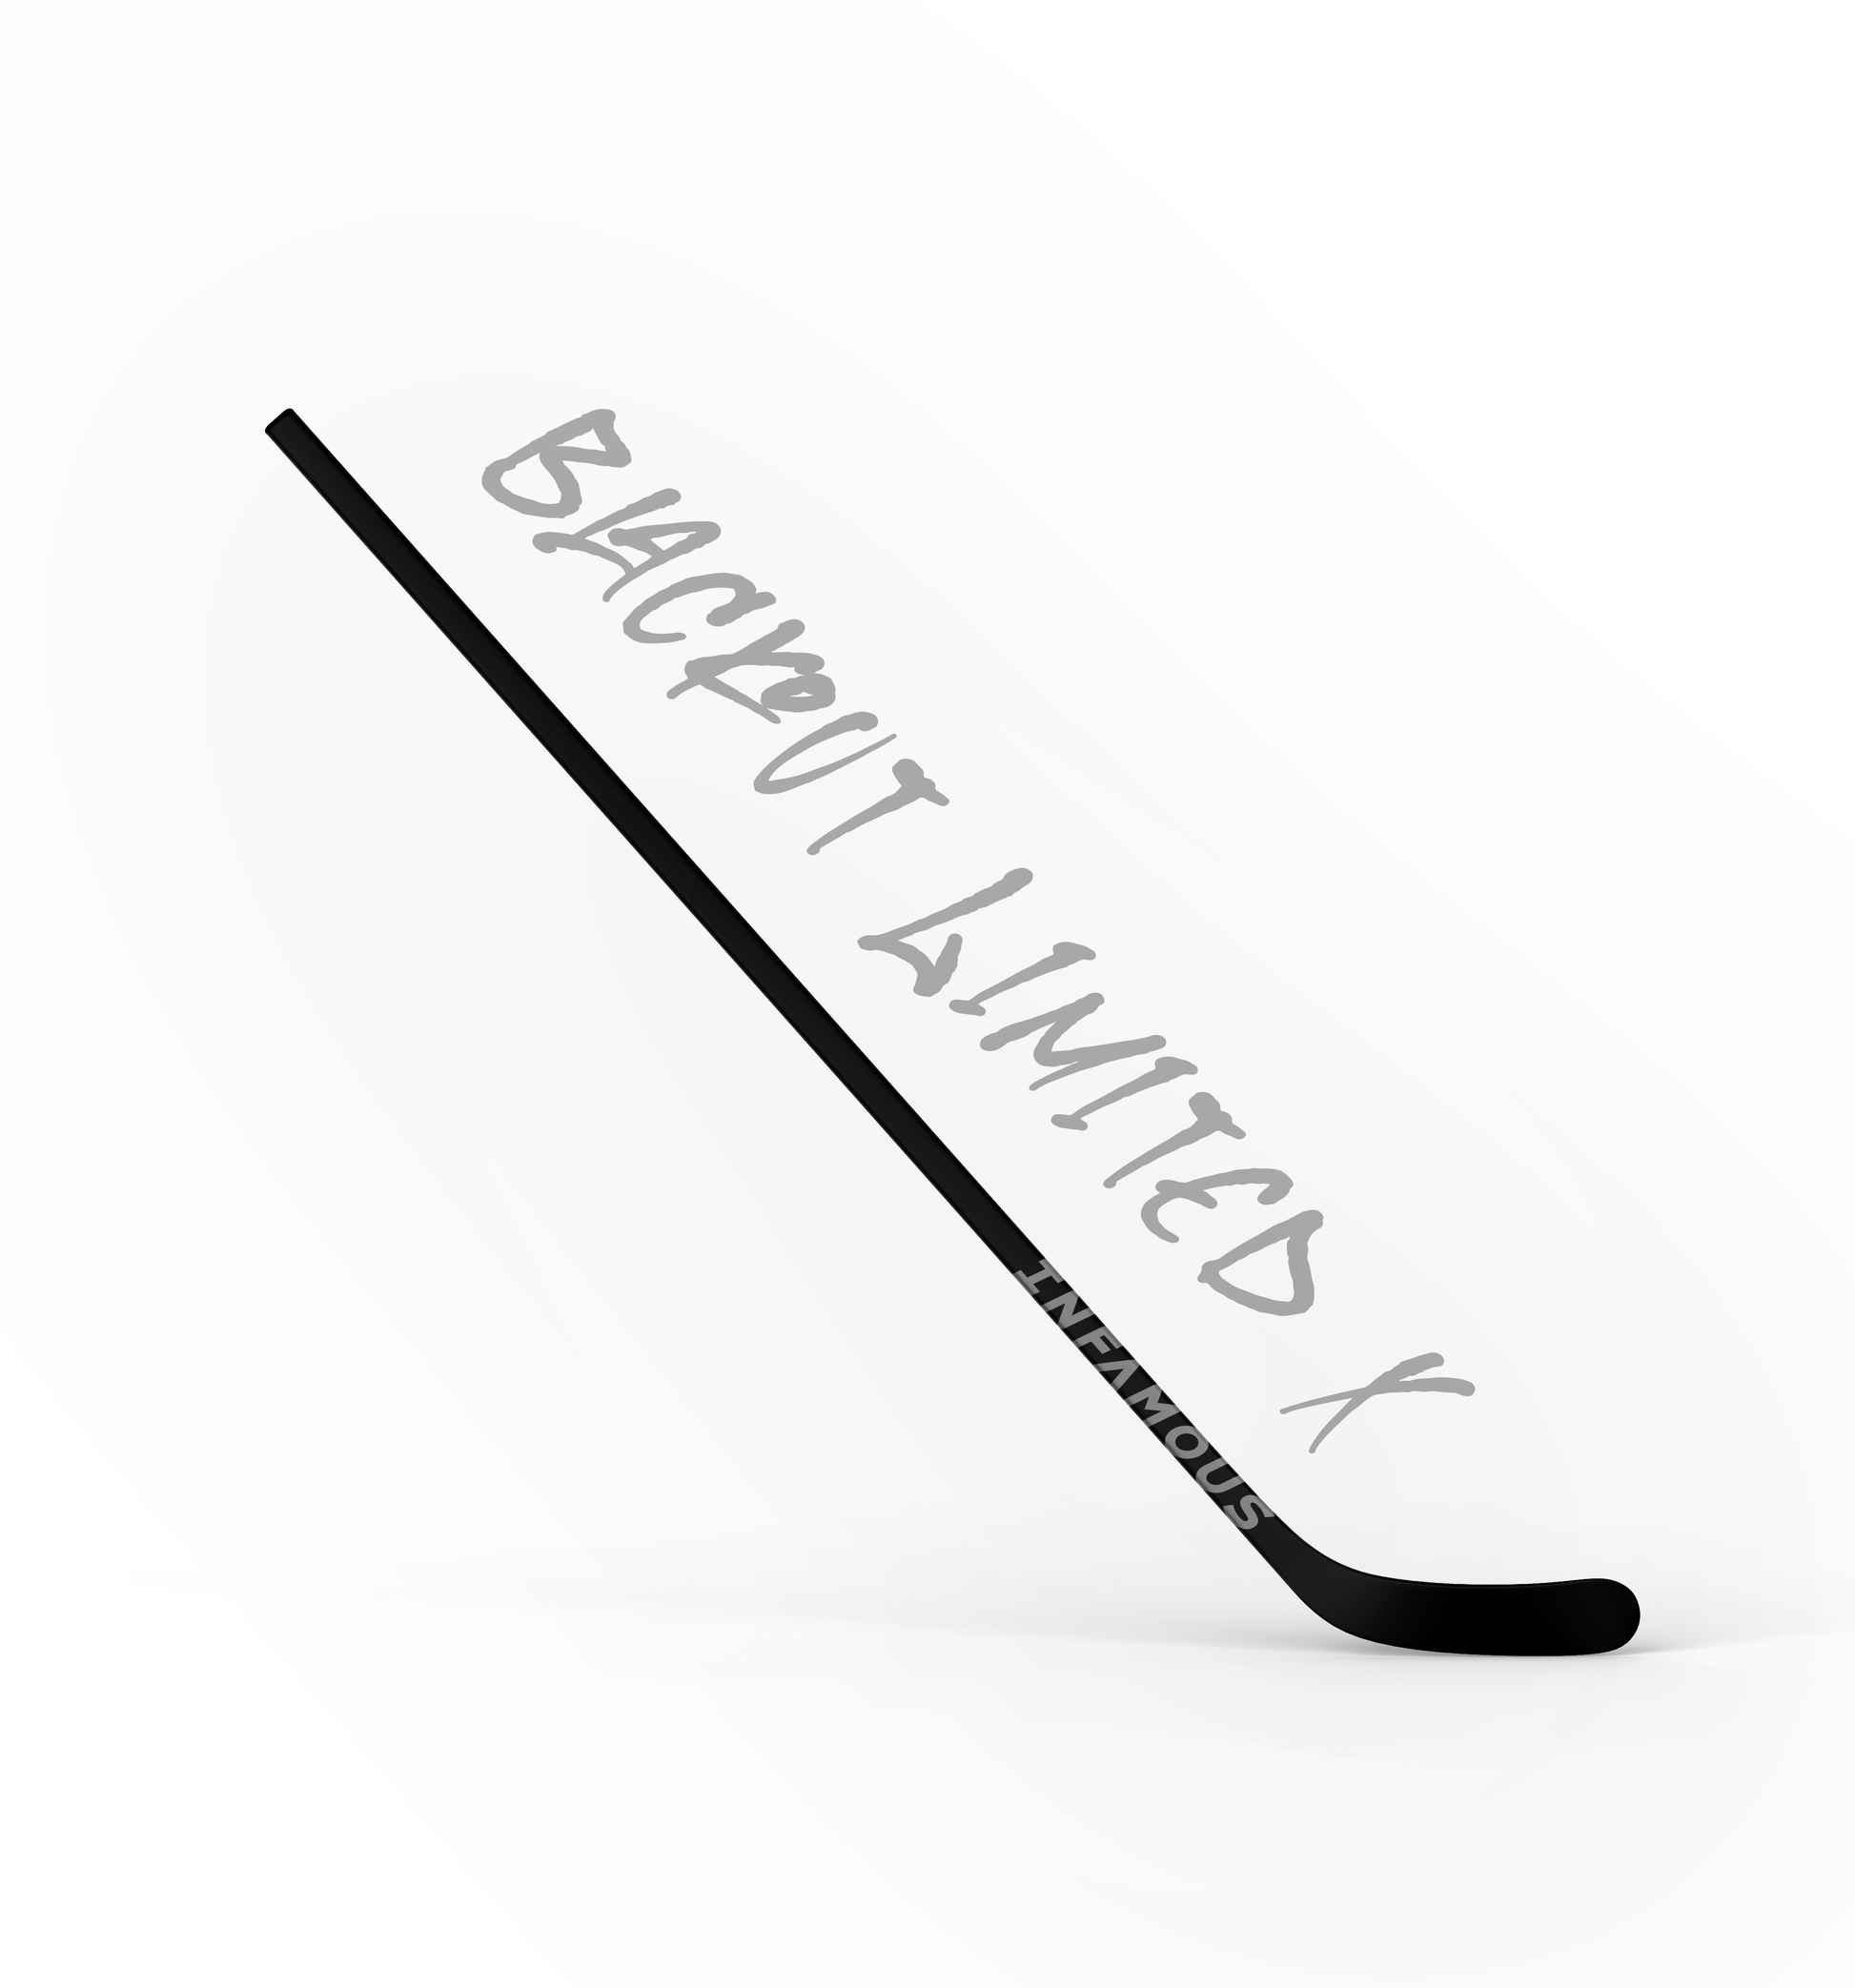 Blackout Limited X Hockey Stick - Infamous Hockey